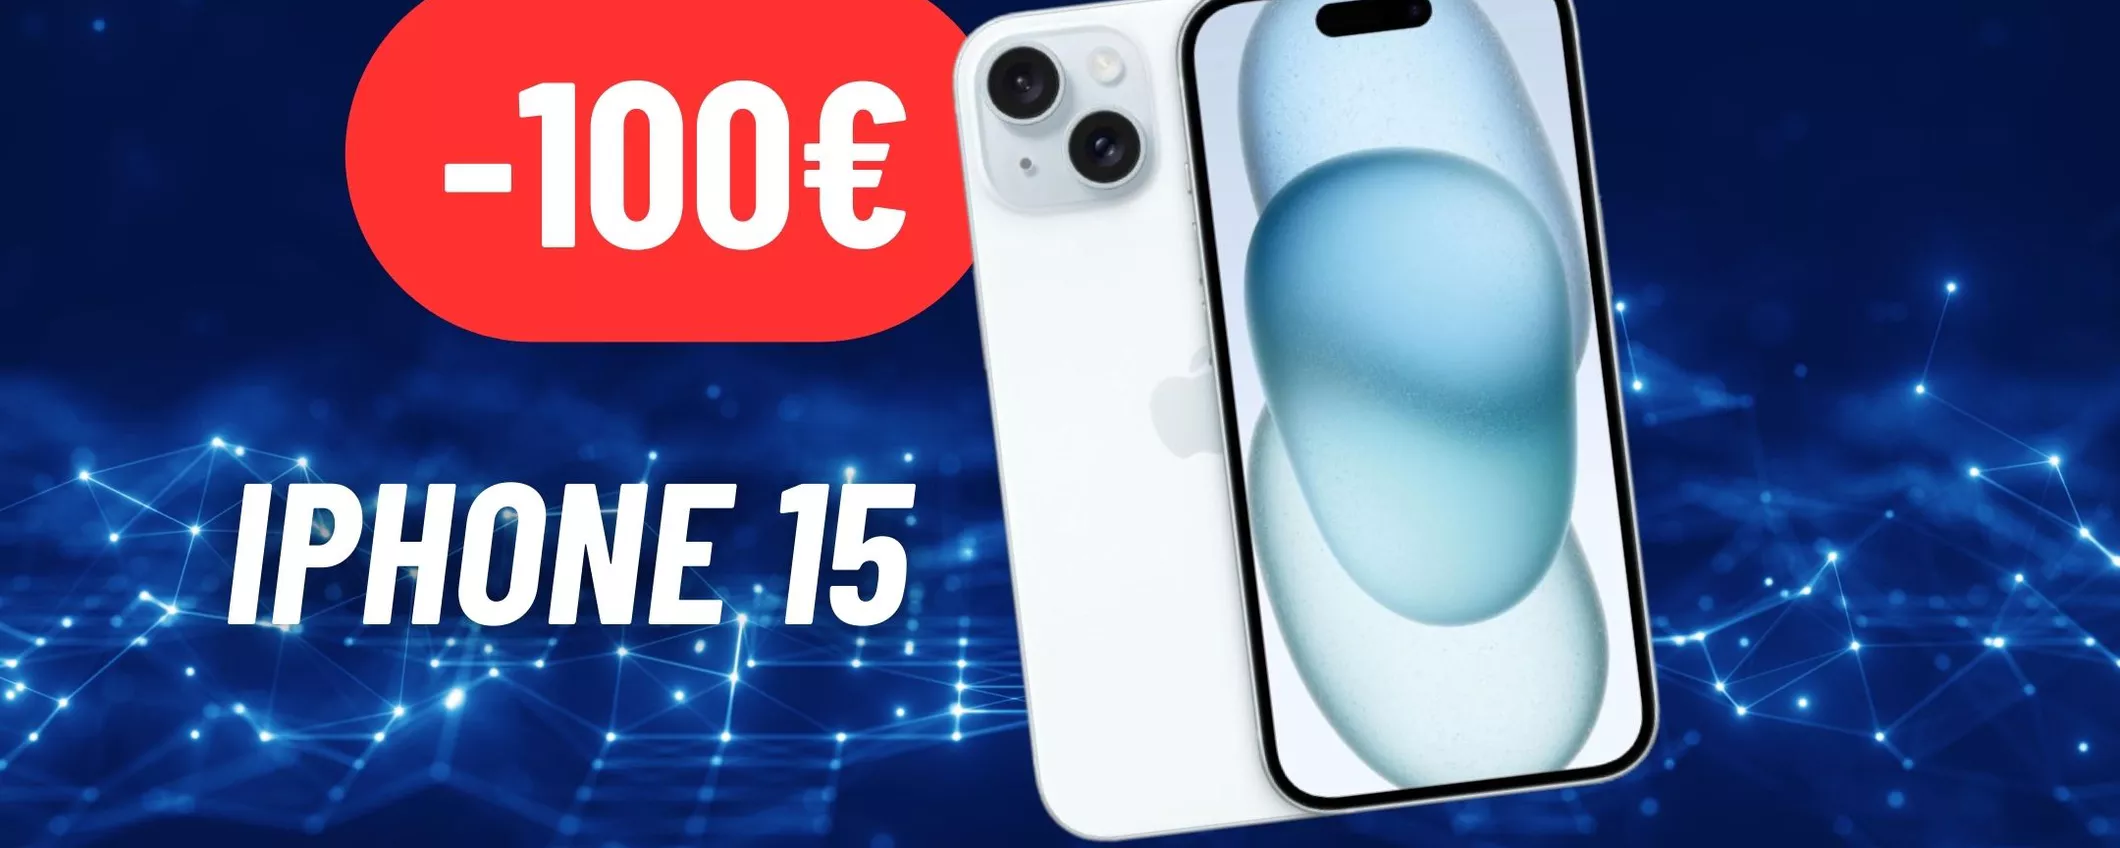 iPhone 15 in offerta su eBay: oggi risparmi 100€